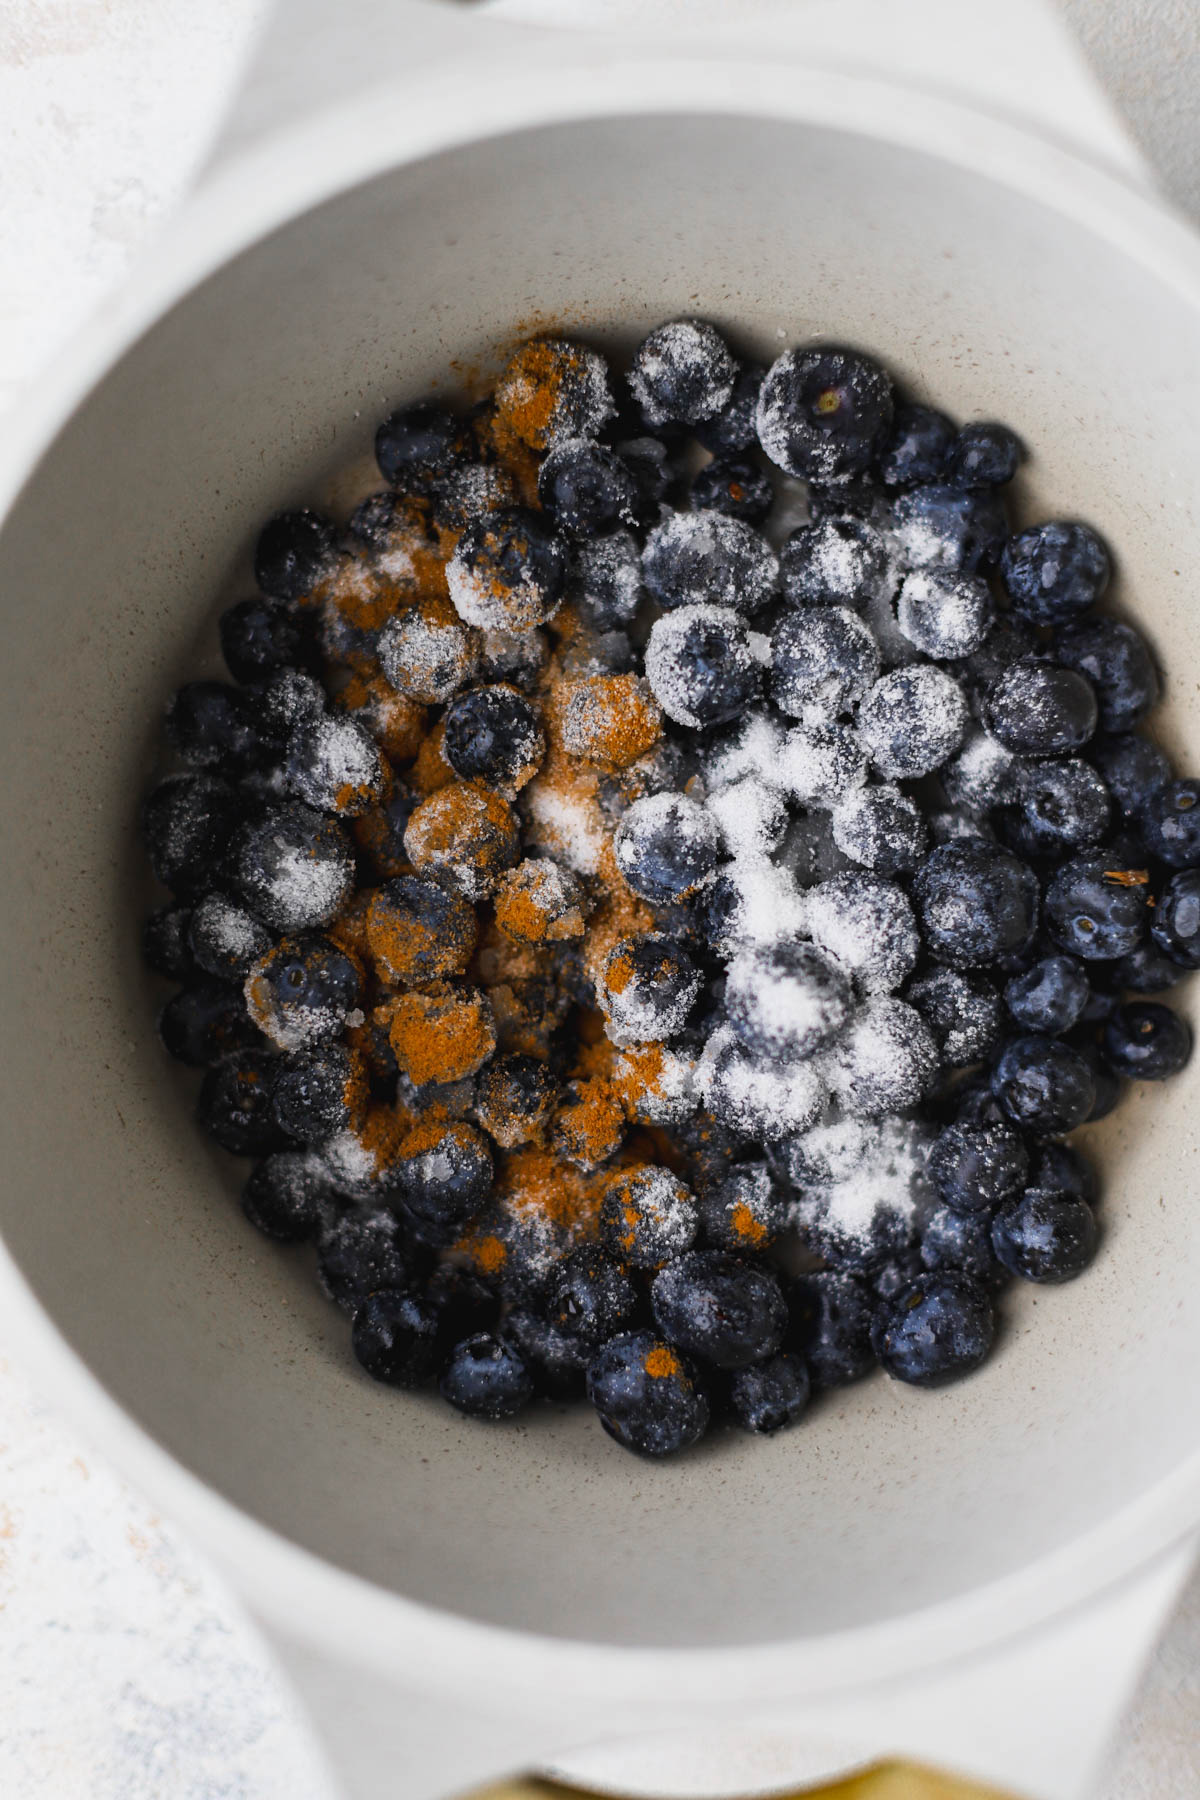 Blueberries, sugar and cinnamon.